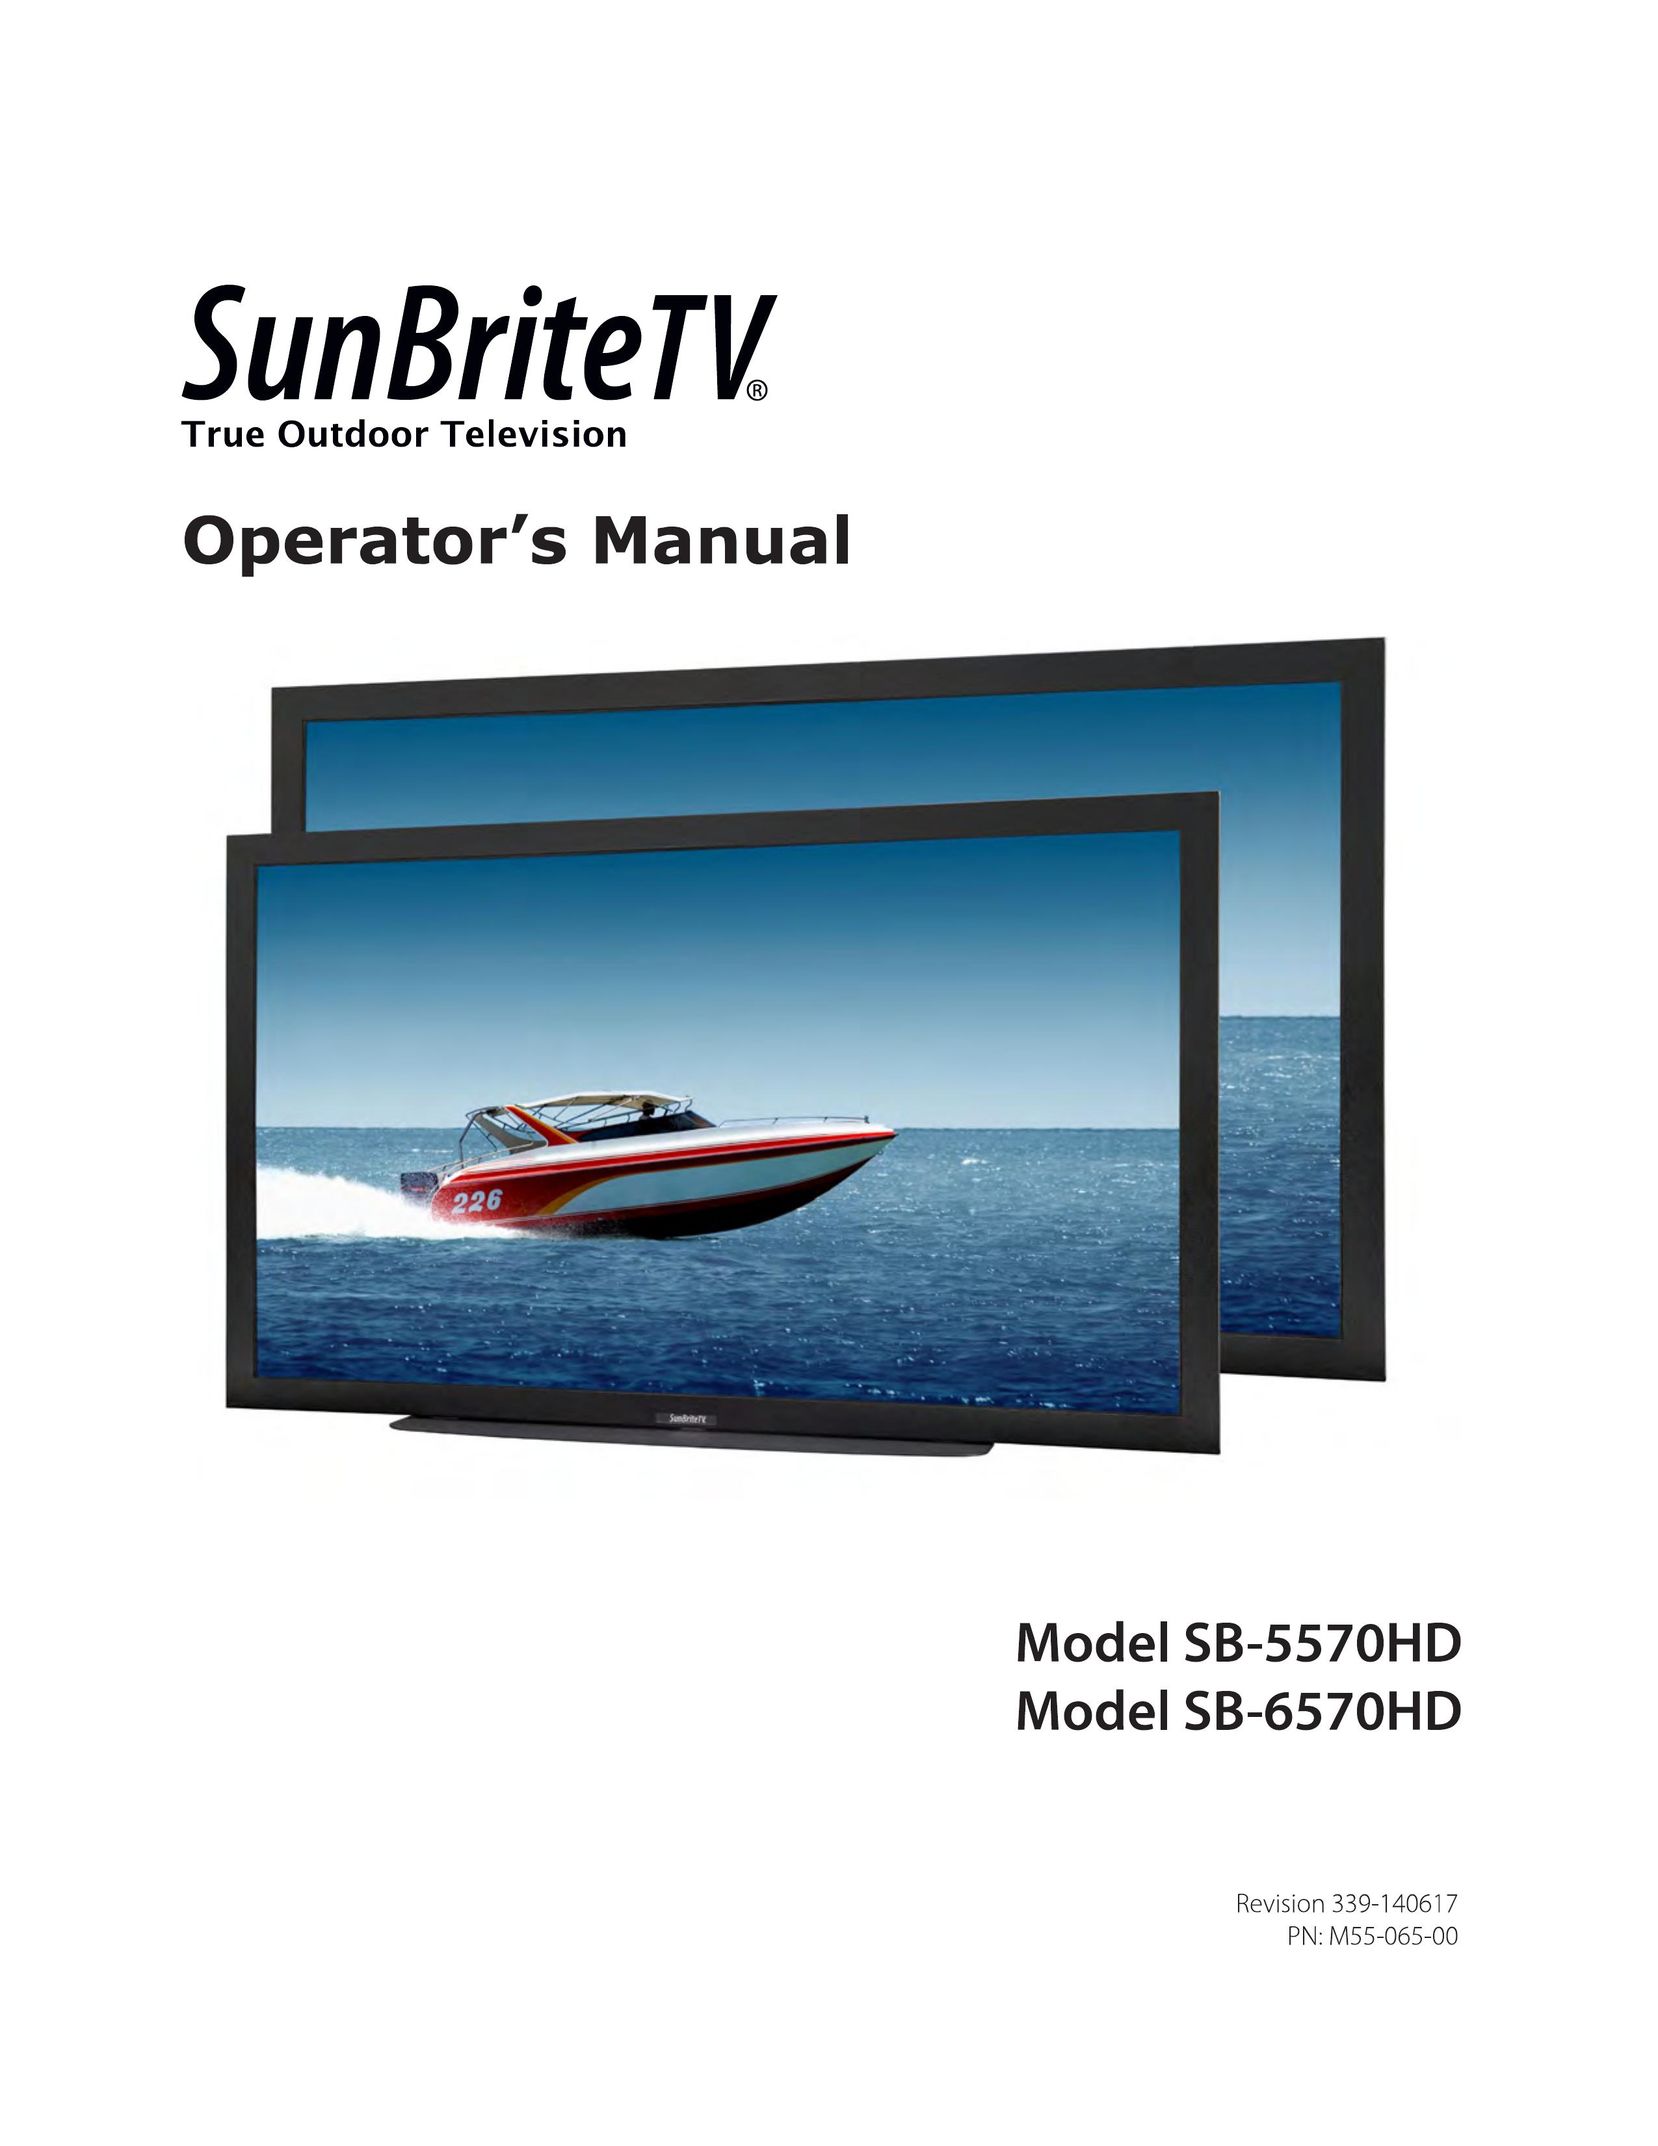 SunBriteTV SB-5570HD CRT Television User Manual